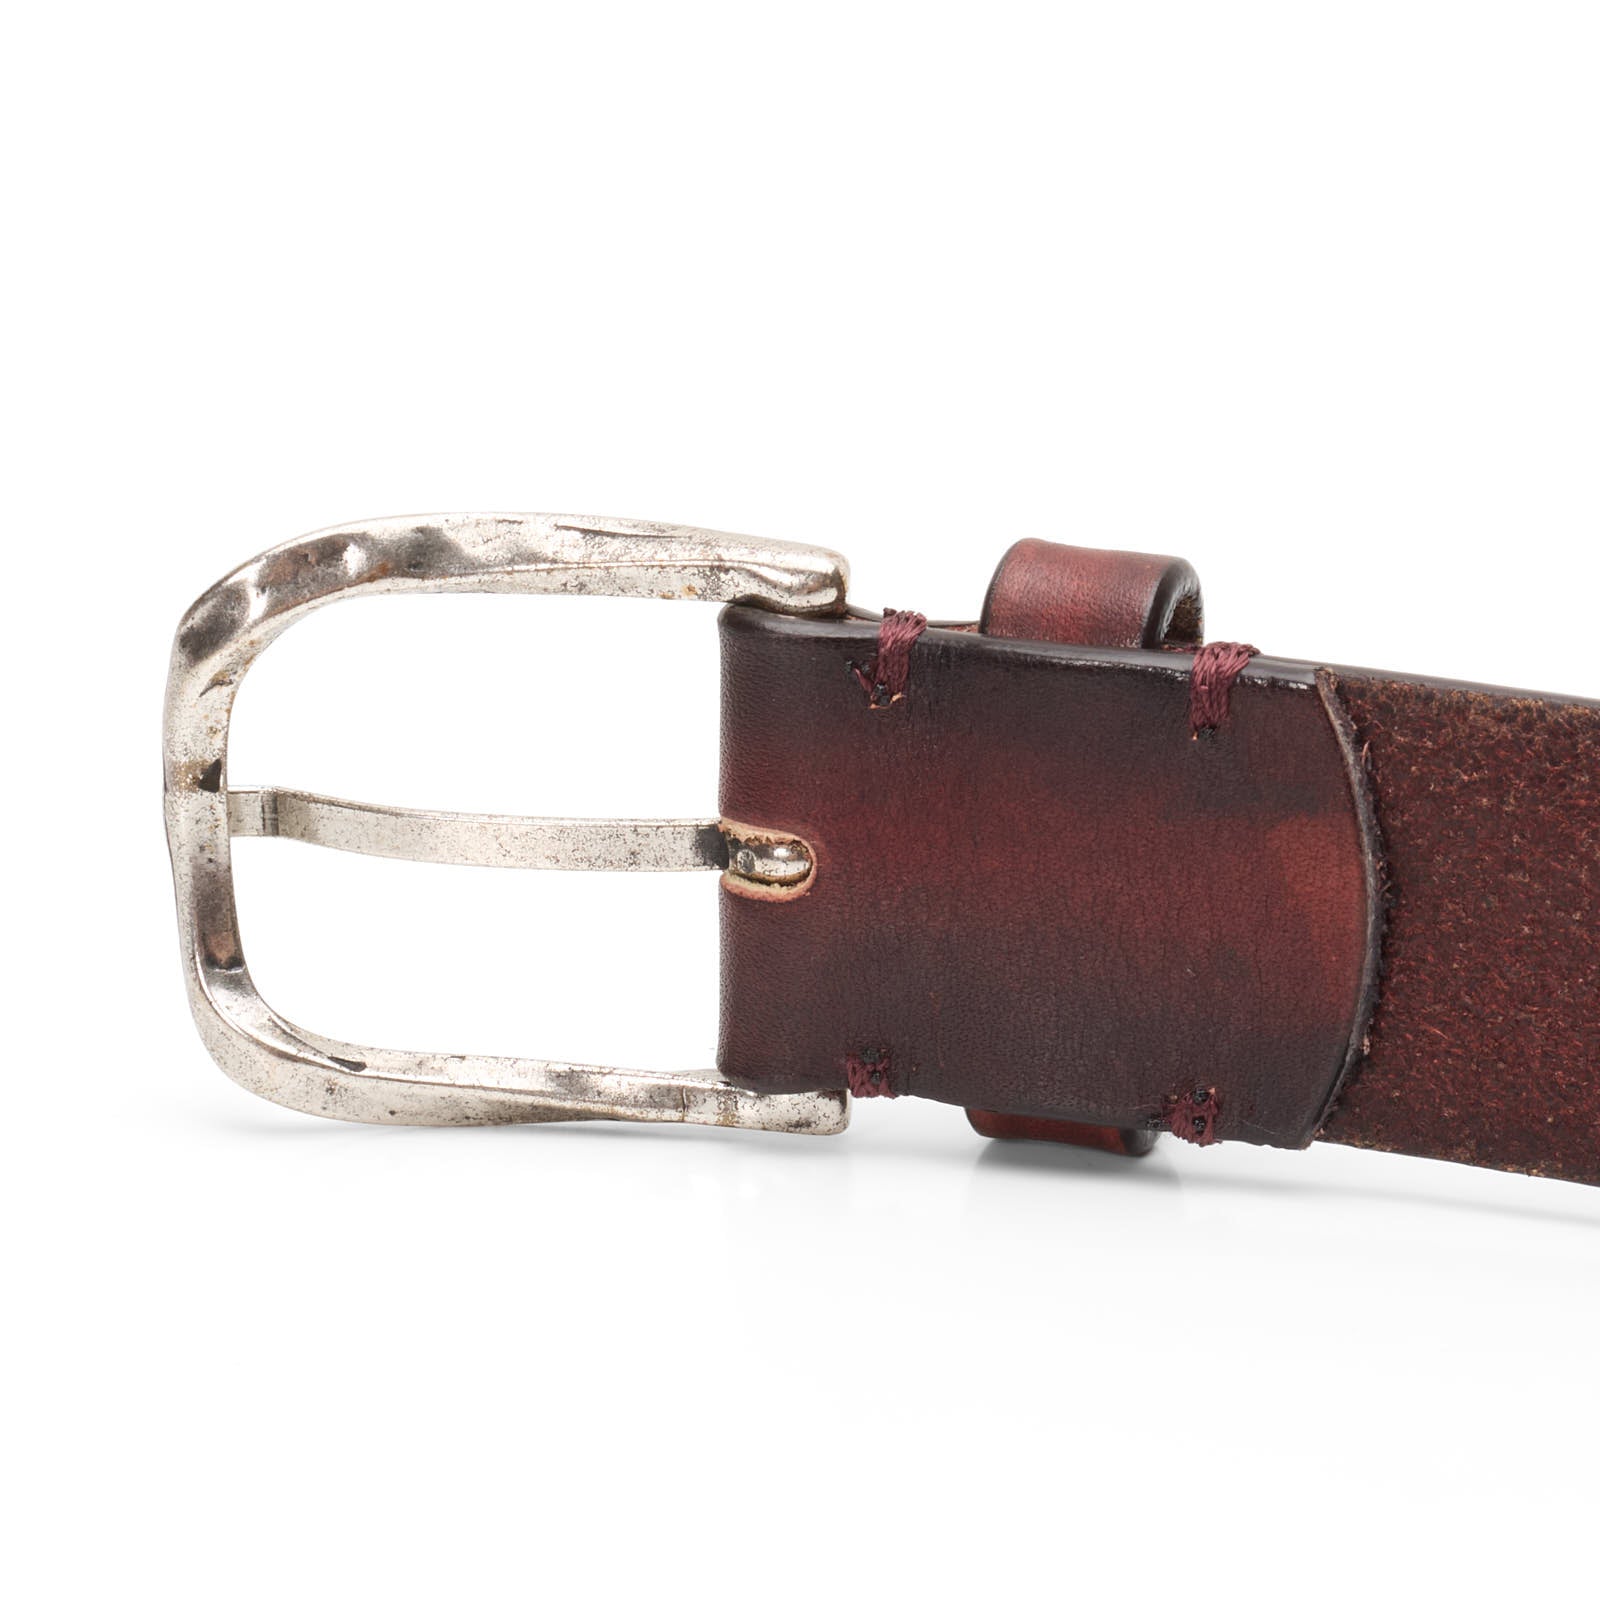 PAOLO VITALE Handmade Burgundy Patina Leather Silver-Tone Buckle Belt 115cm NEW 46"